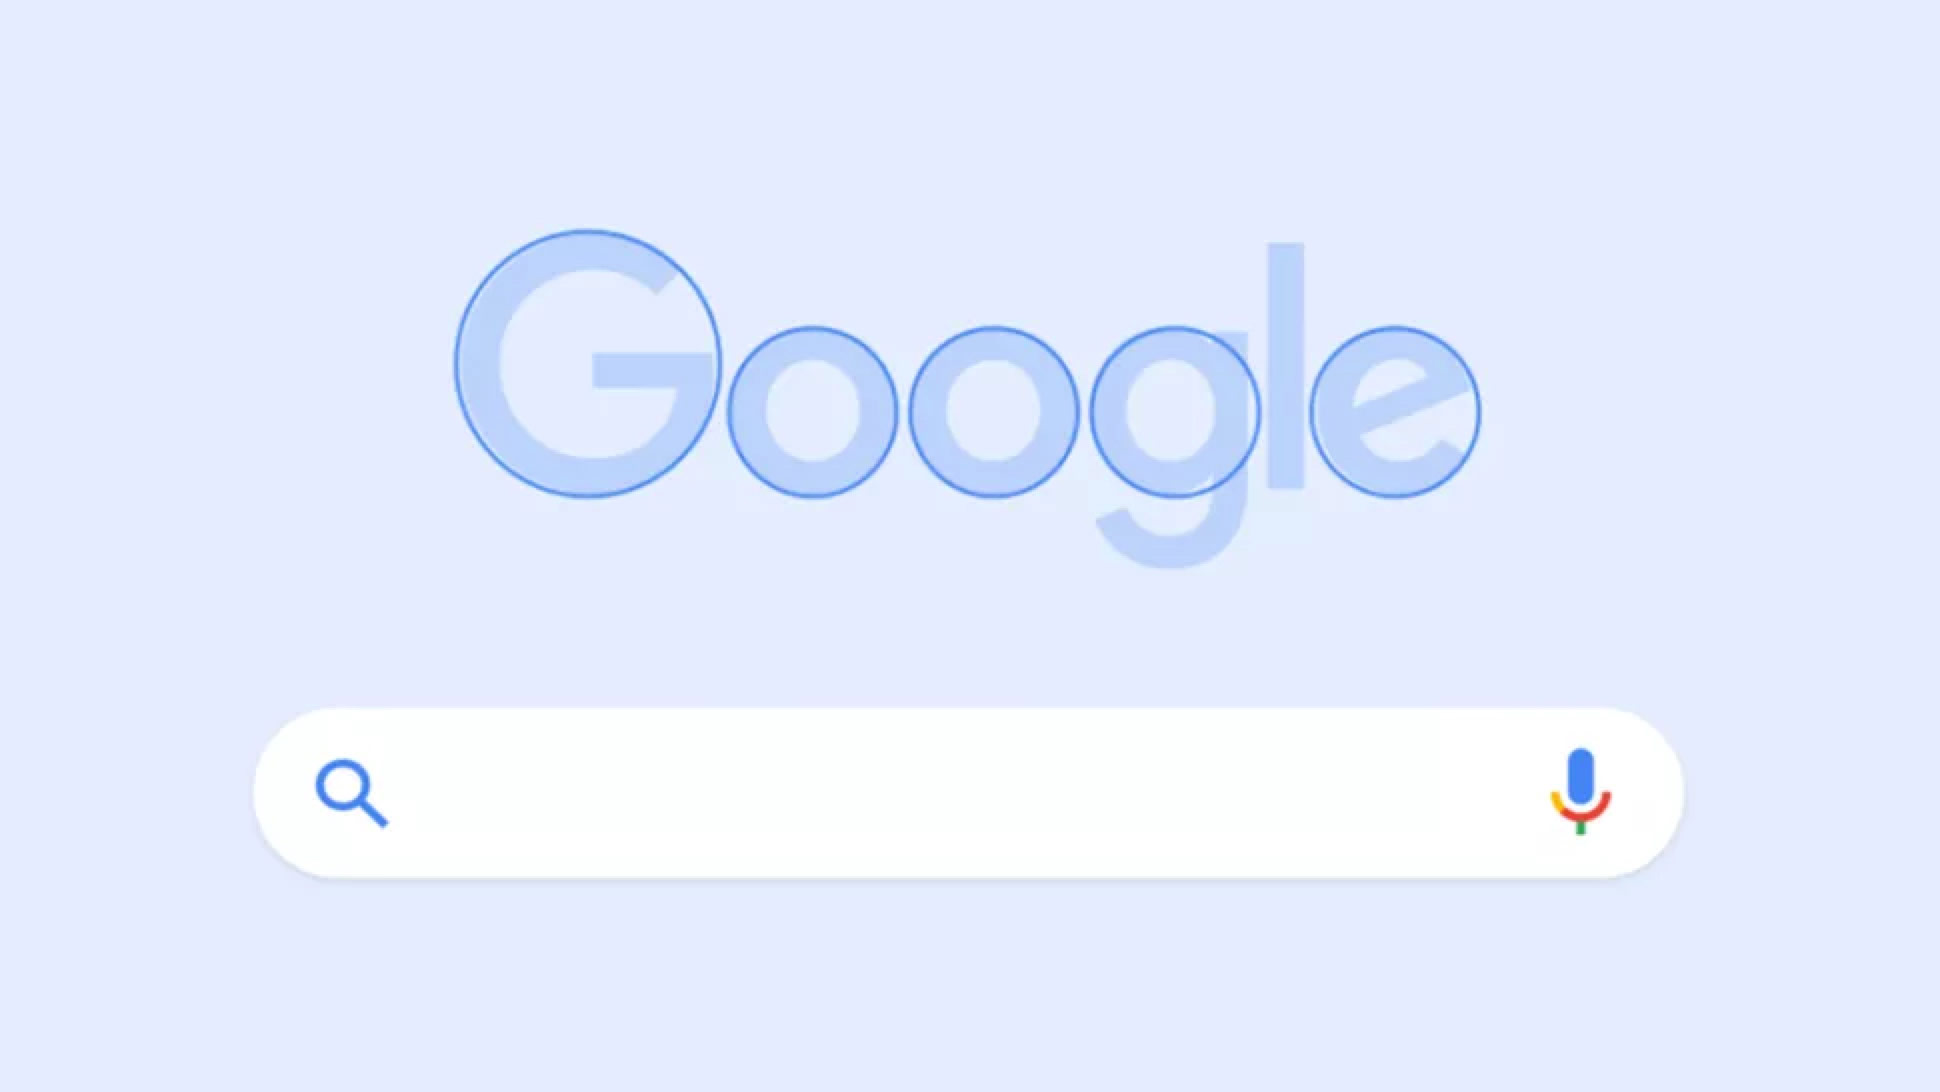 Google design